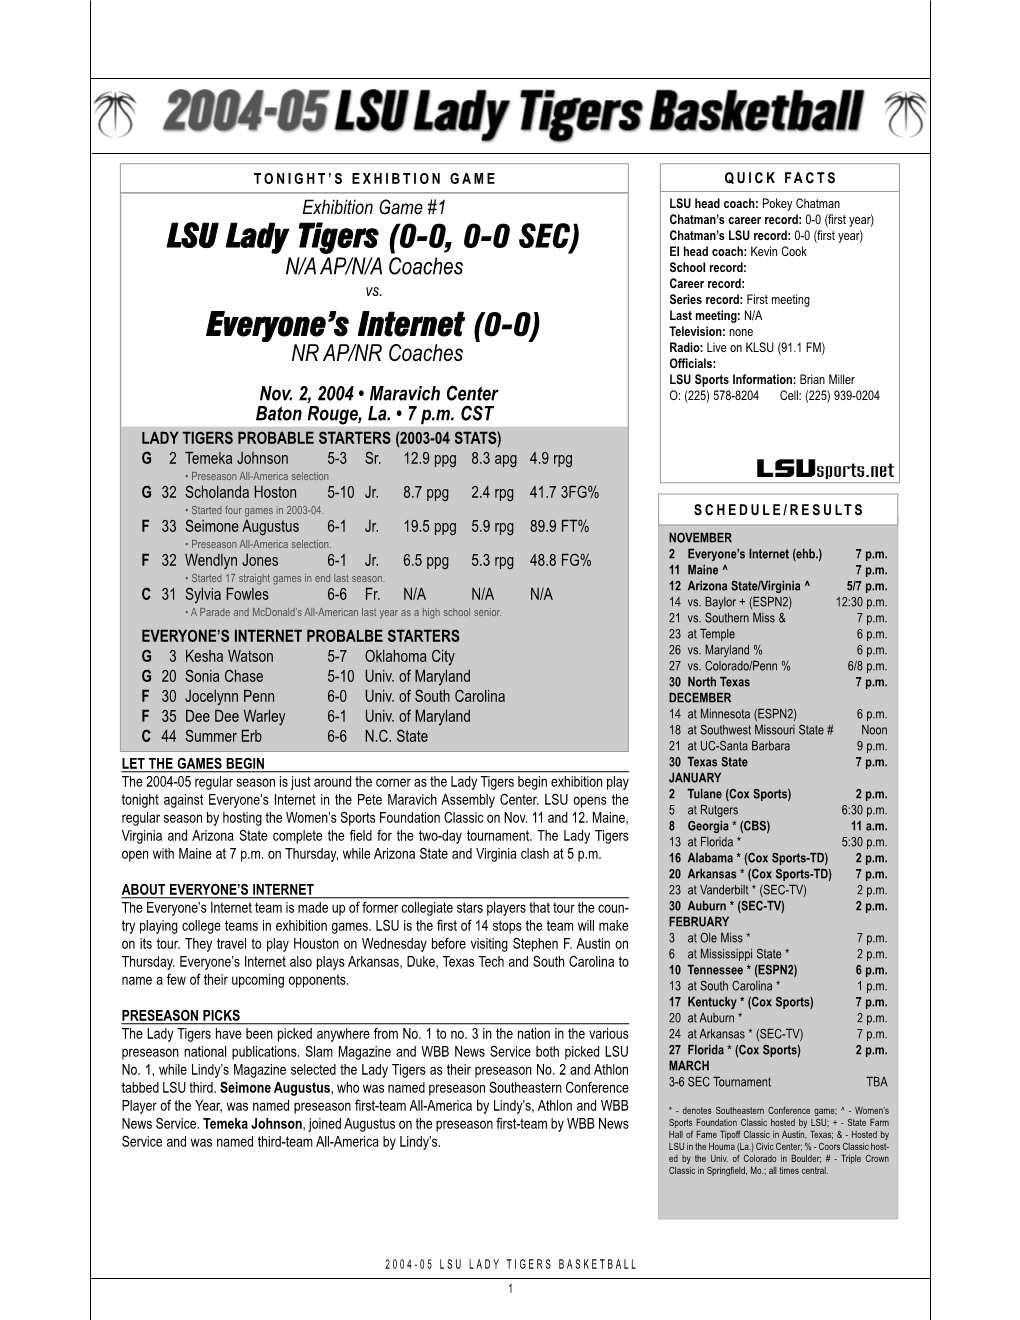 LSU Lady Tigers (0-0, 0-0 SEC) EI Head Coach: Kevin Cook N/A AP/N/A Coaches School Record: Vs